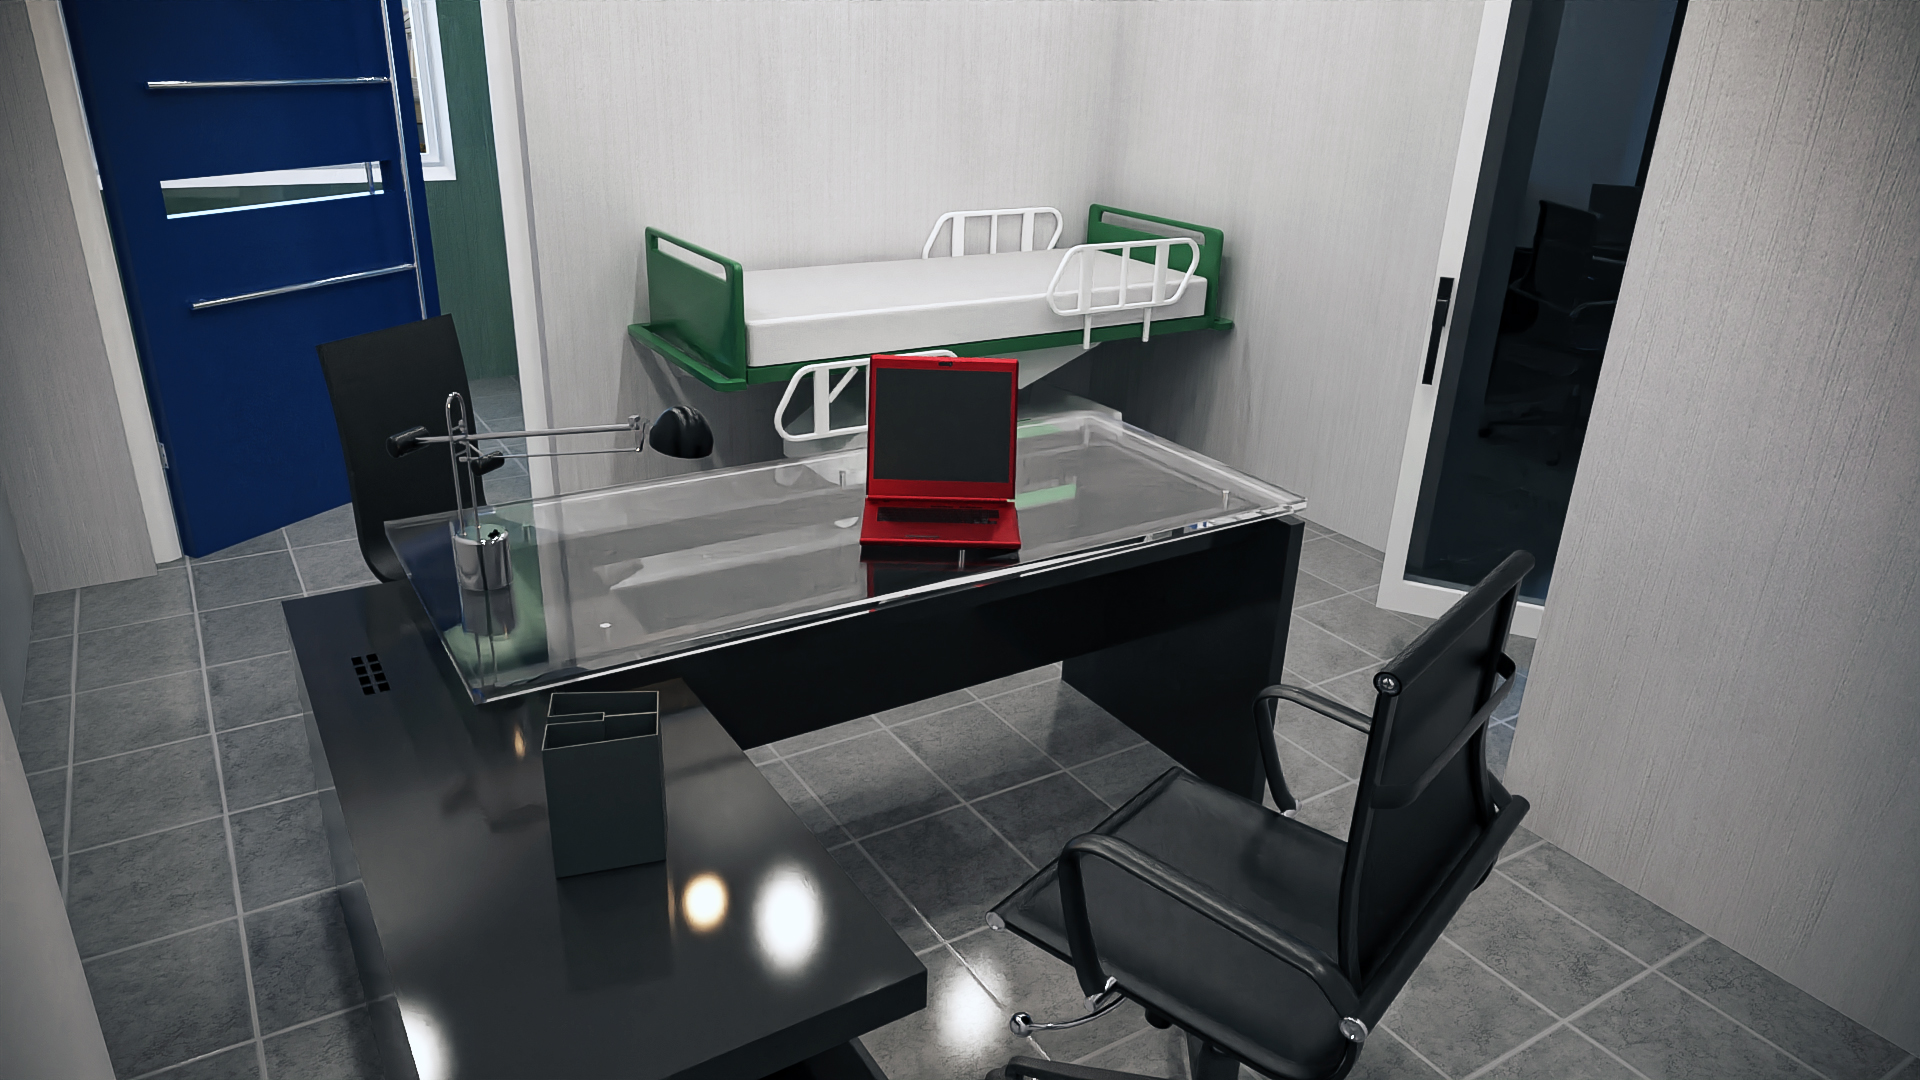 Ambulatory Care Department by: Tesla3dCorp, 3D Models by Daz 3D